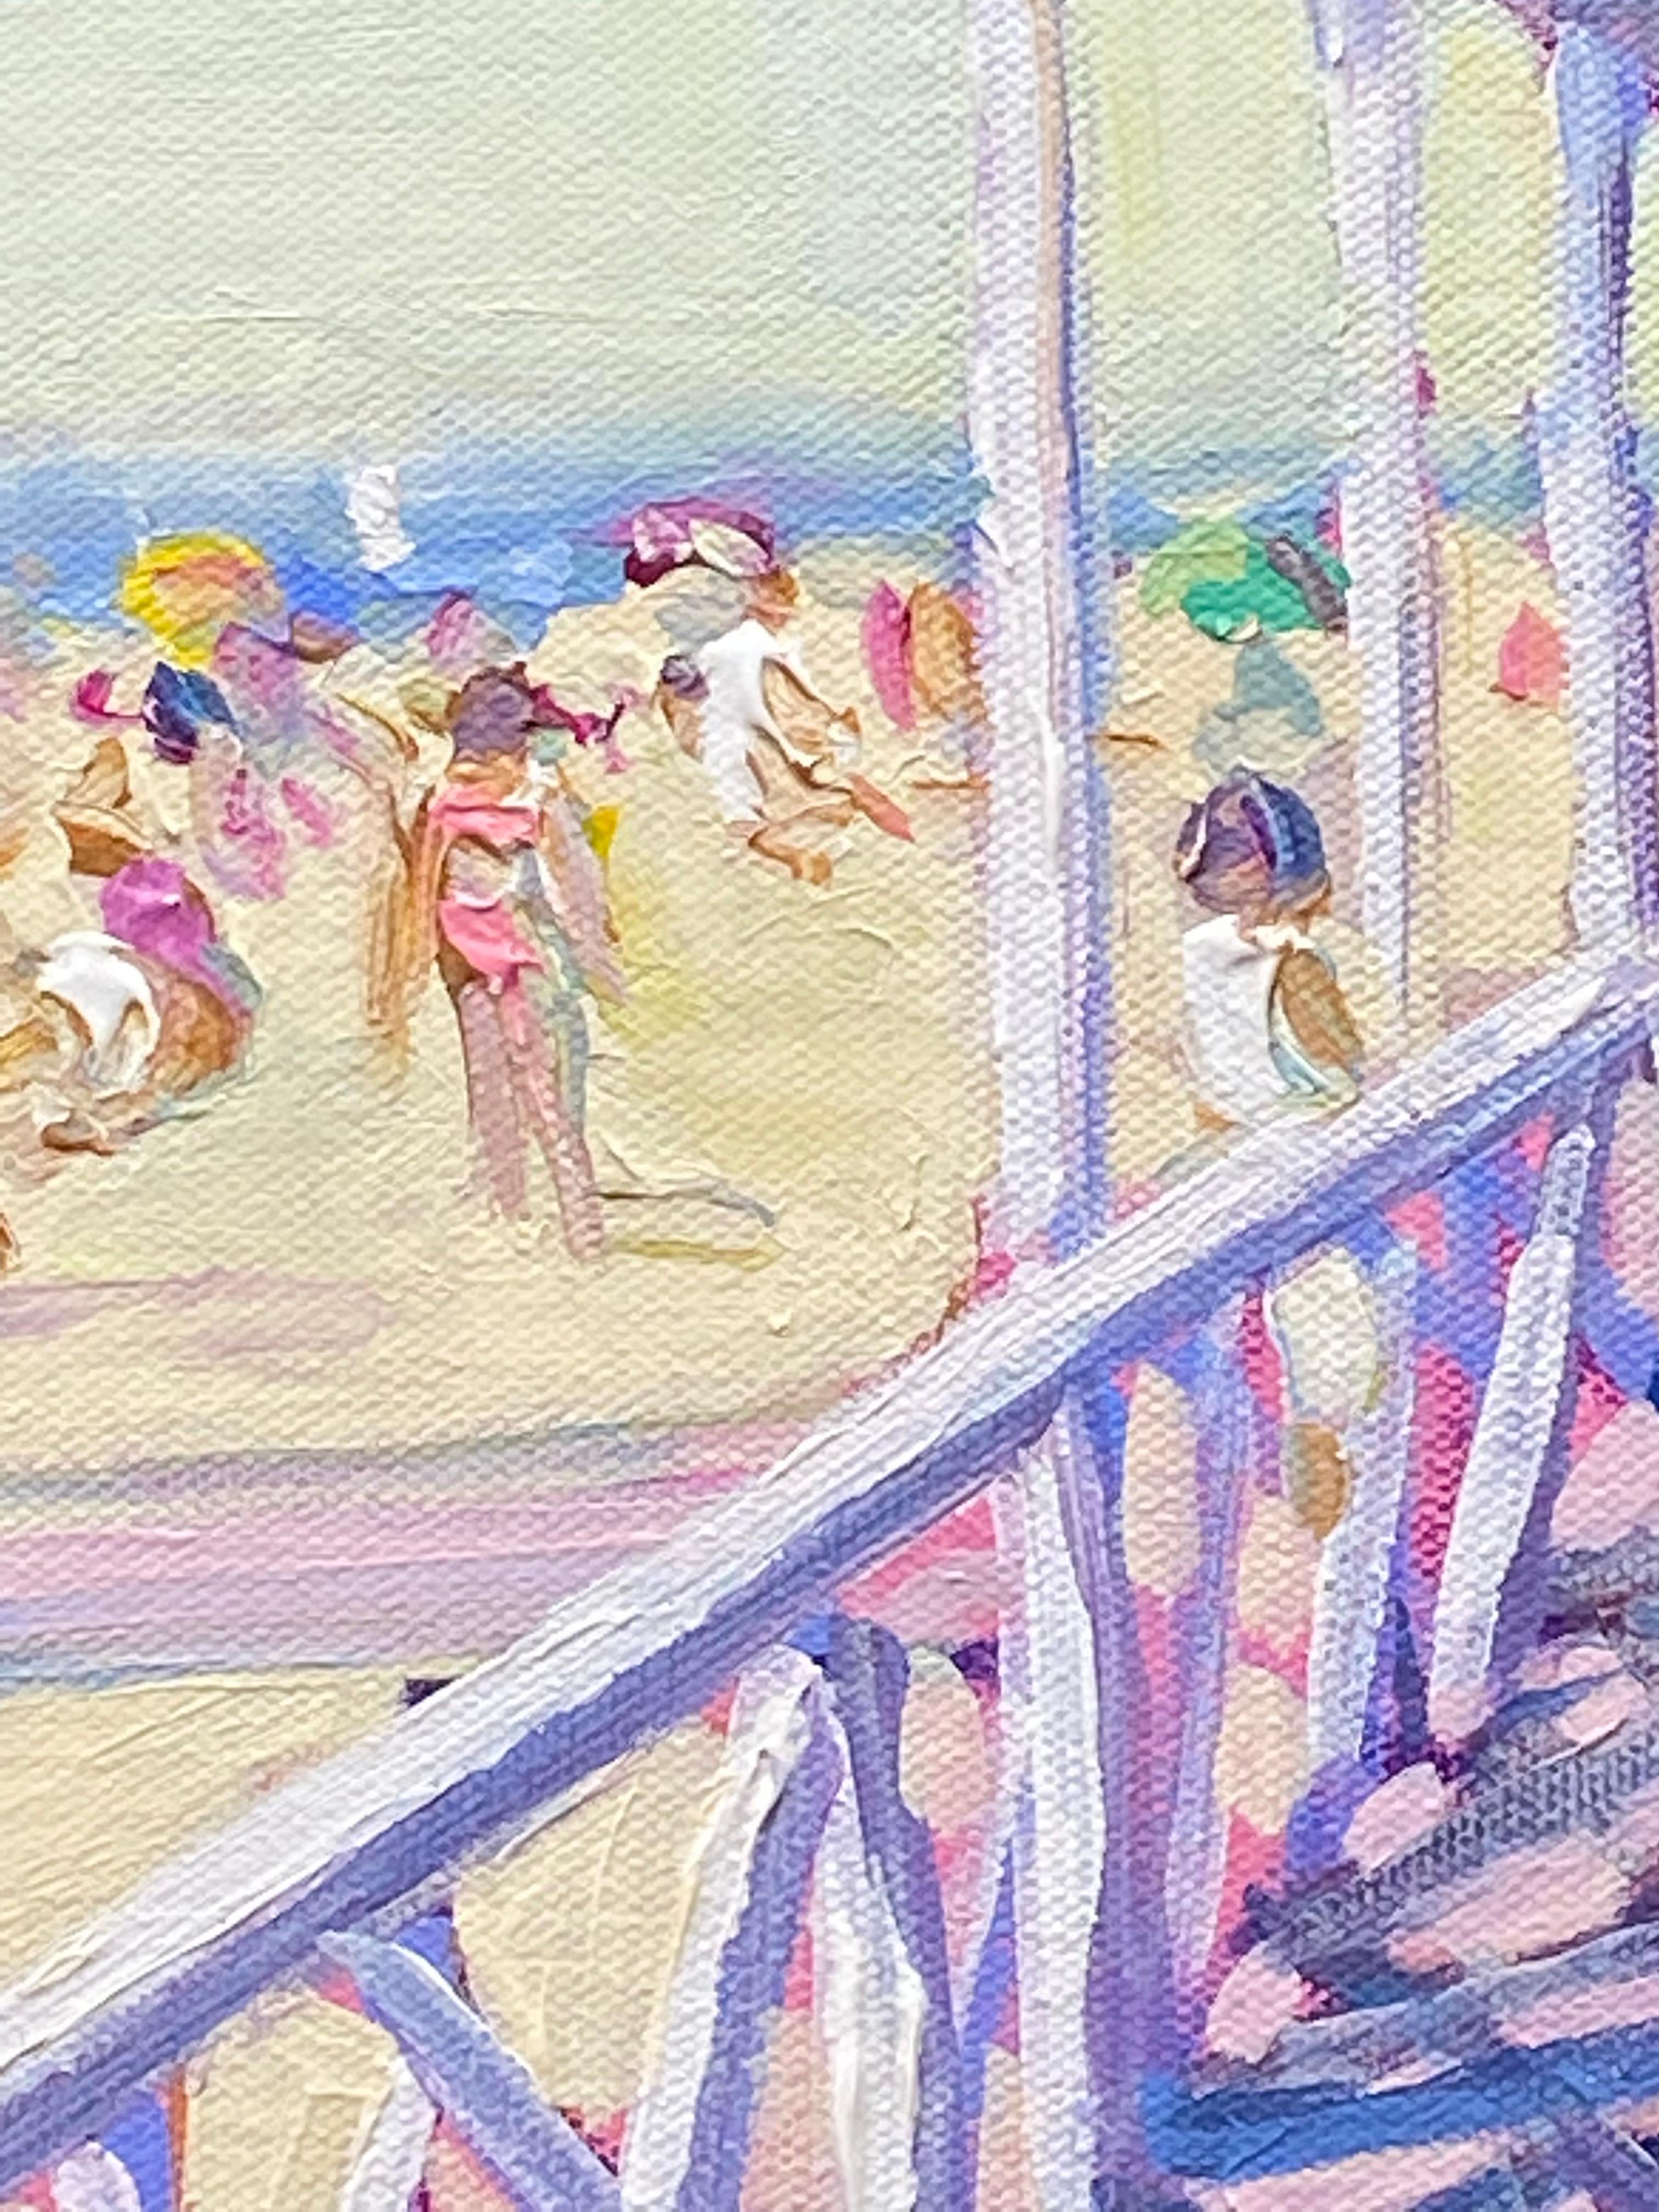 “Pavilion Cooper’s Beach Southampton” - Painting by John Crimmins